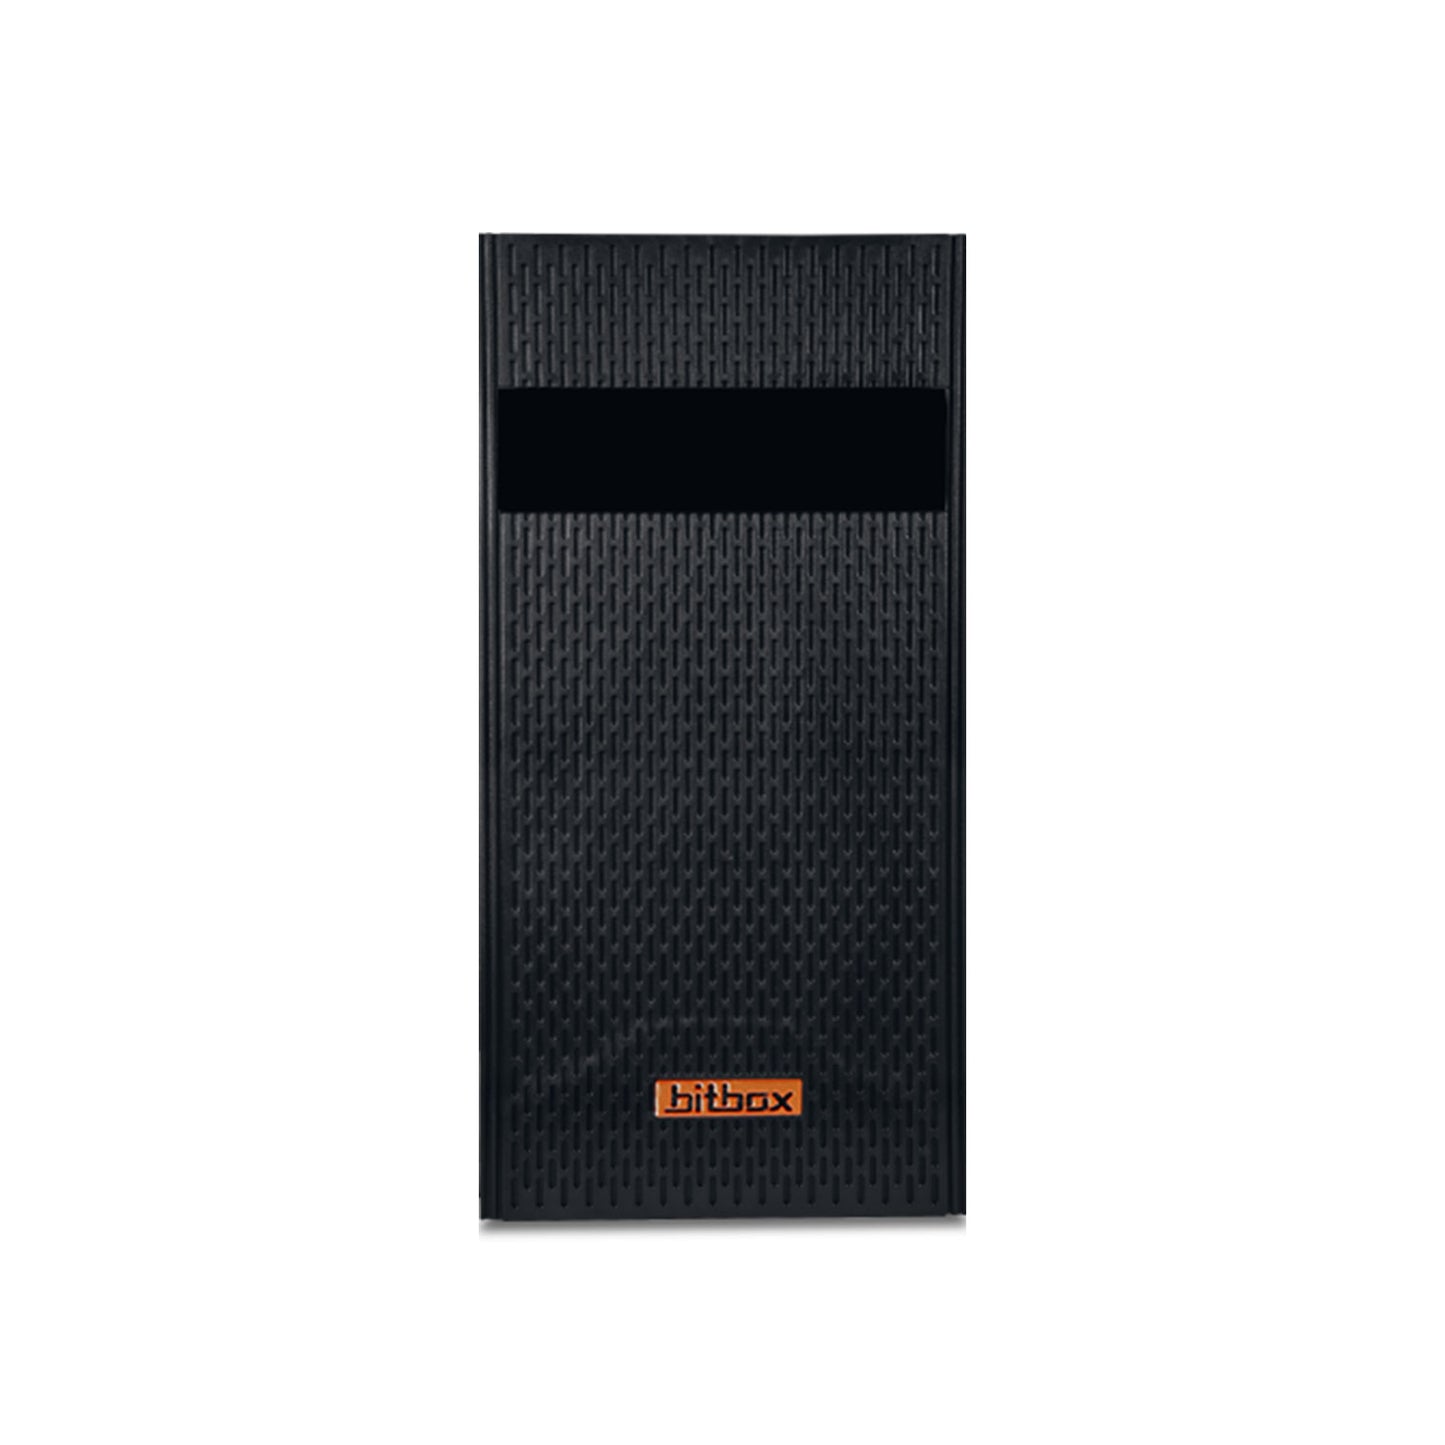 BitBox-PC Micro Tower MT-5336, Intel i5 12th Gen, 16GB RAM, 1TB SSD with 3-Year Warranty